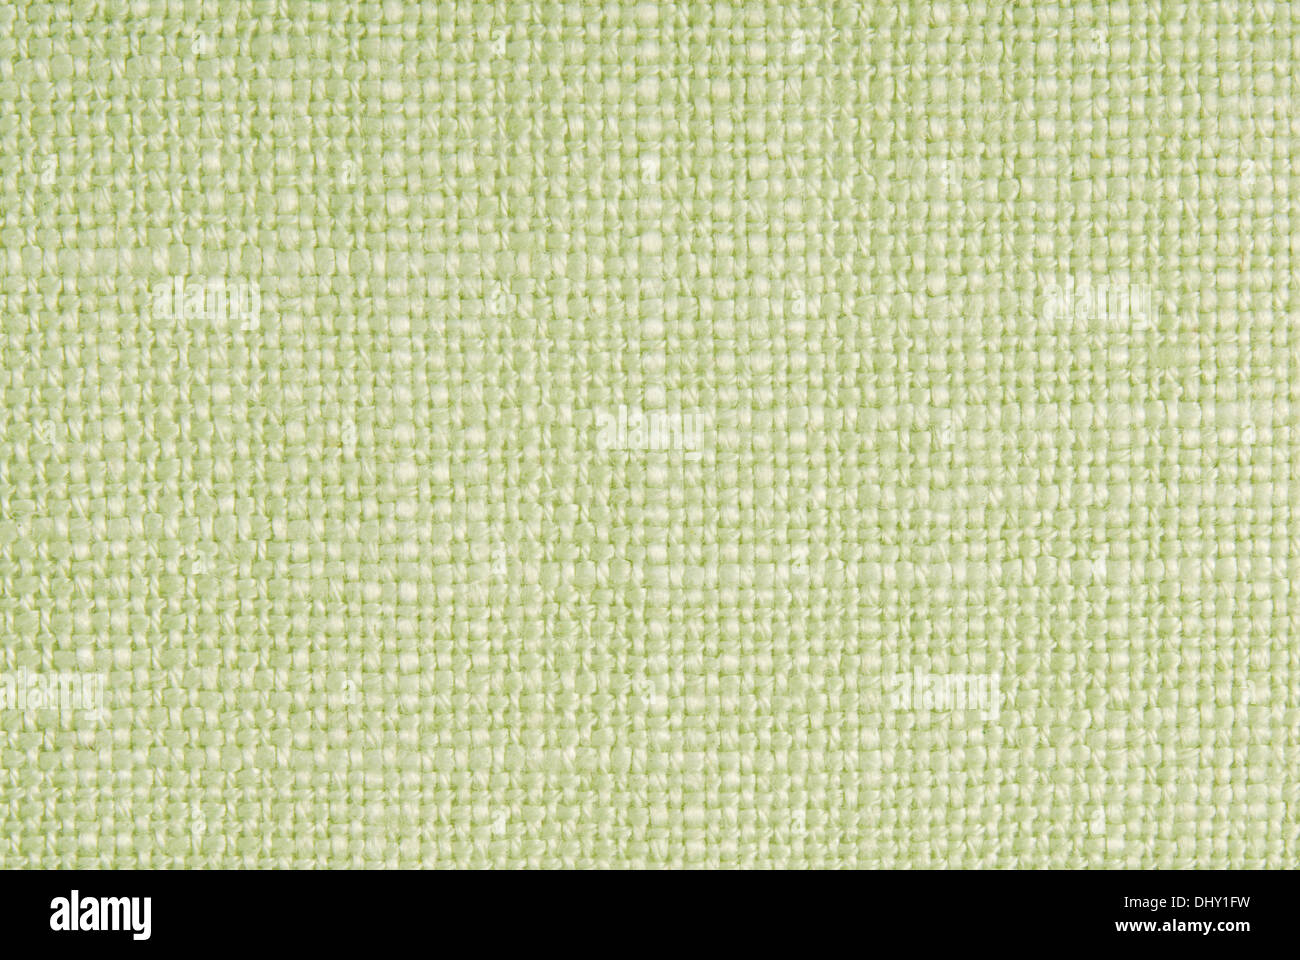 Textura de tela de lino Foto de stock